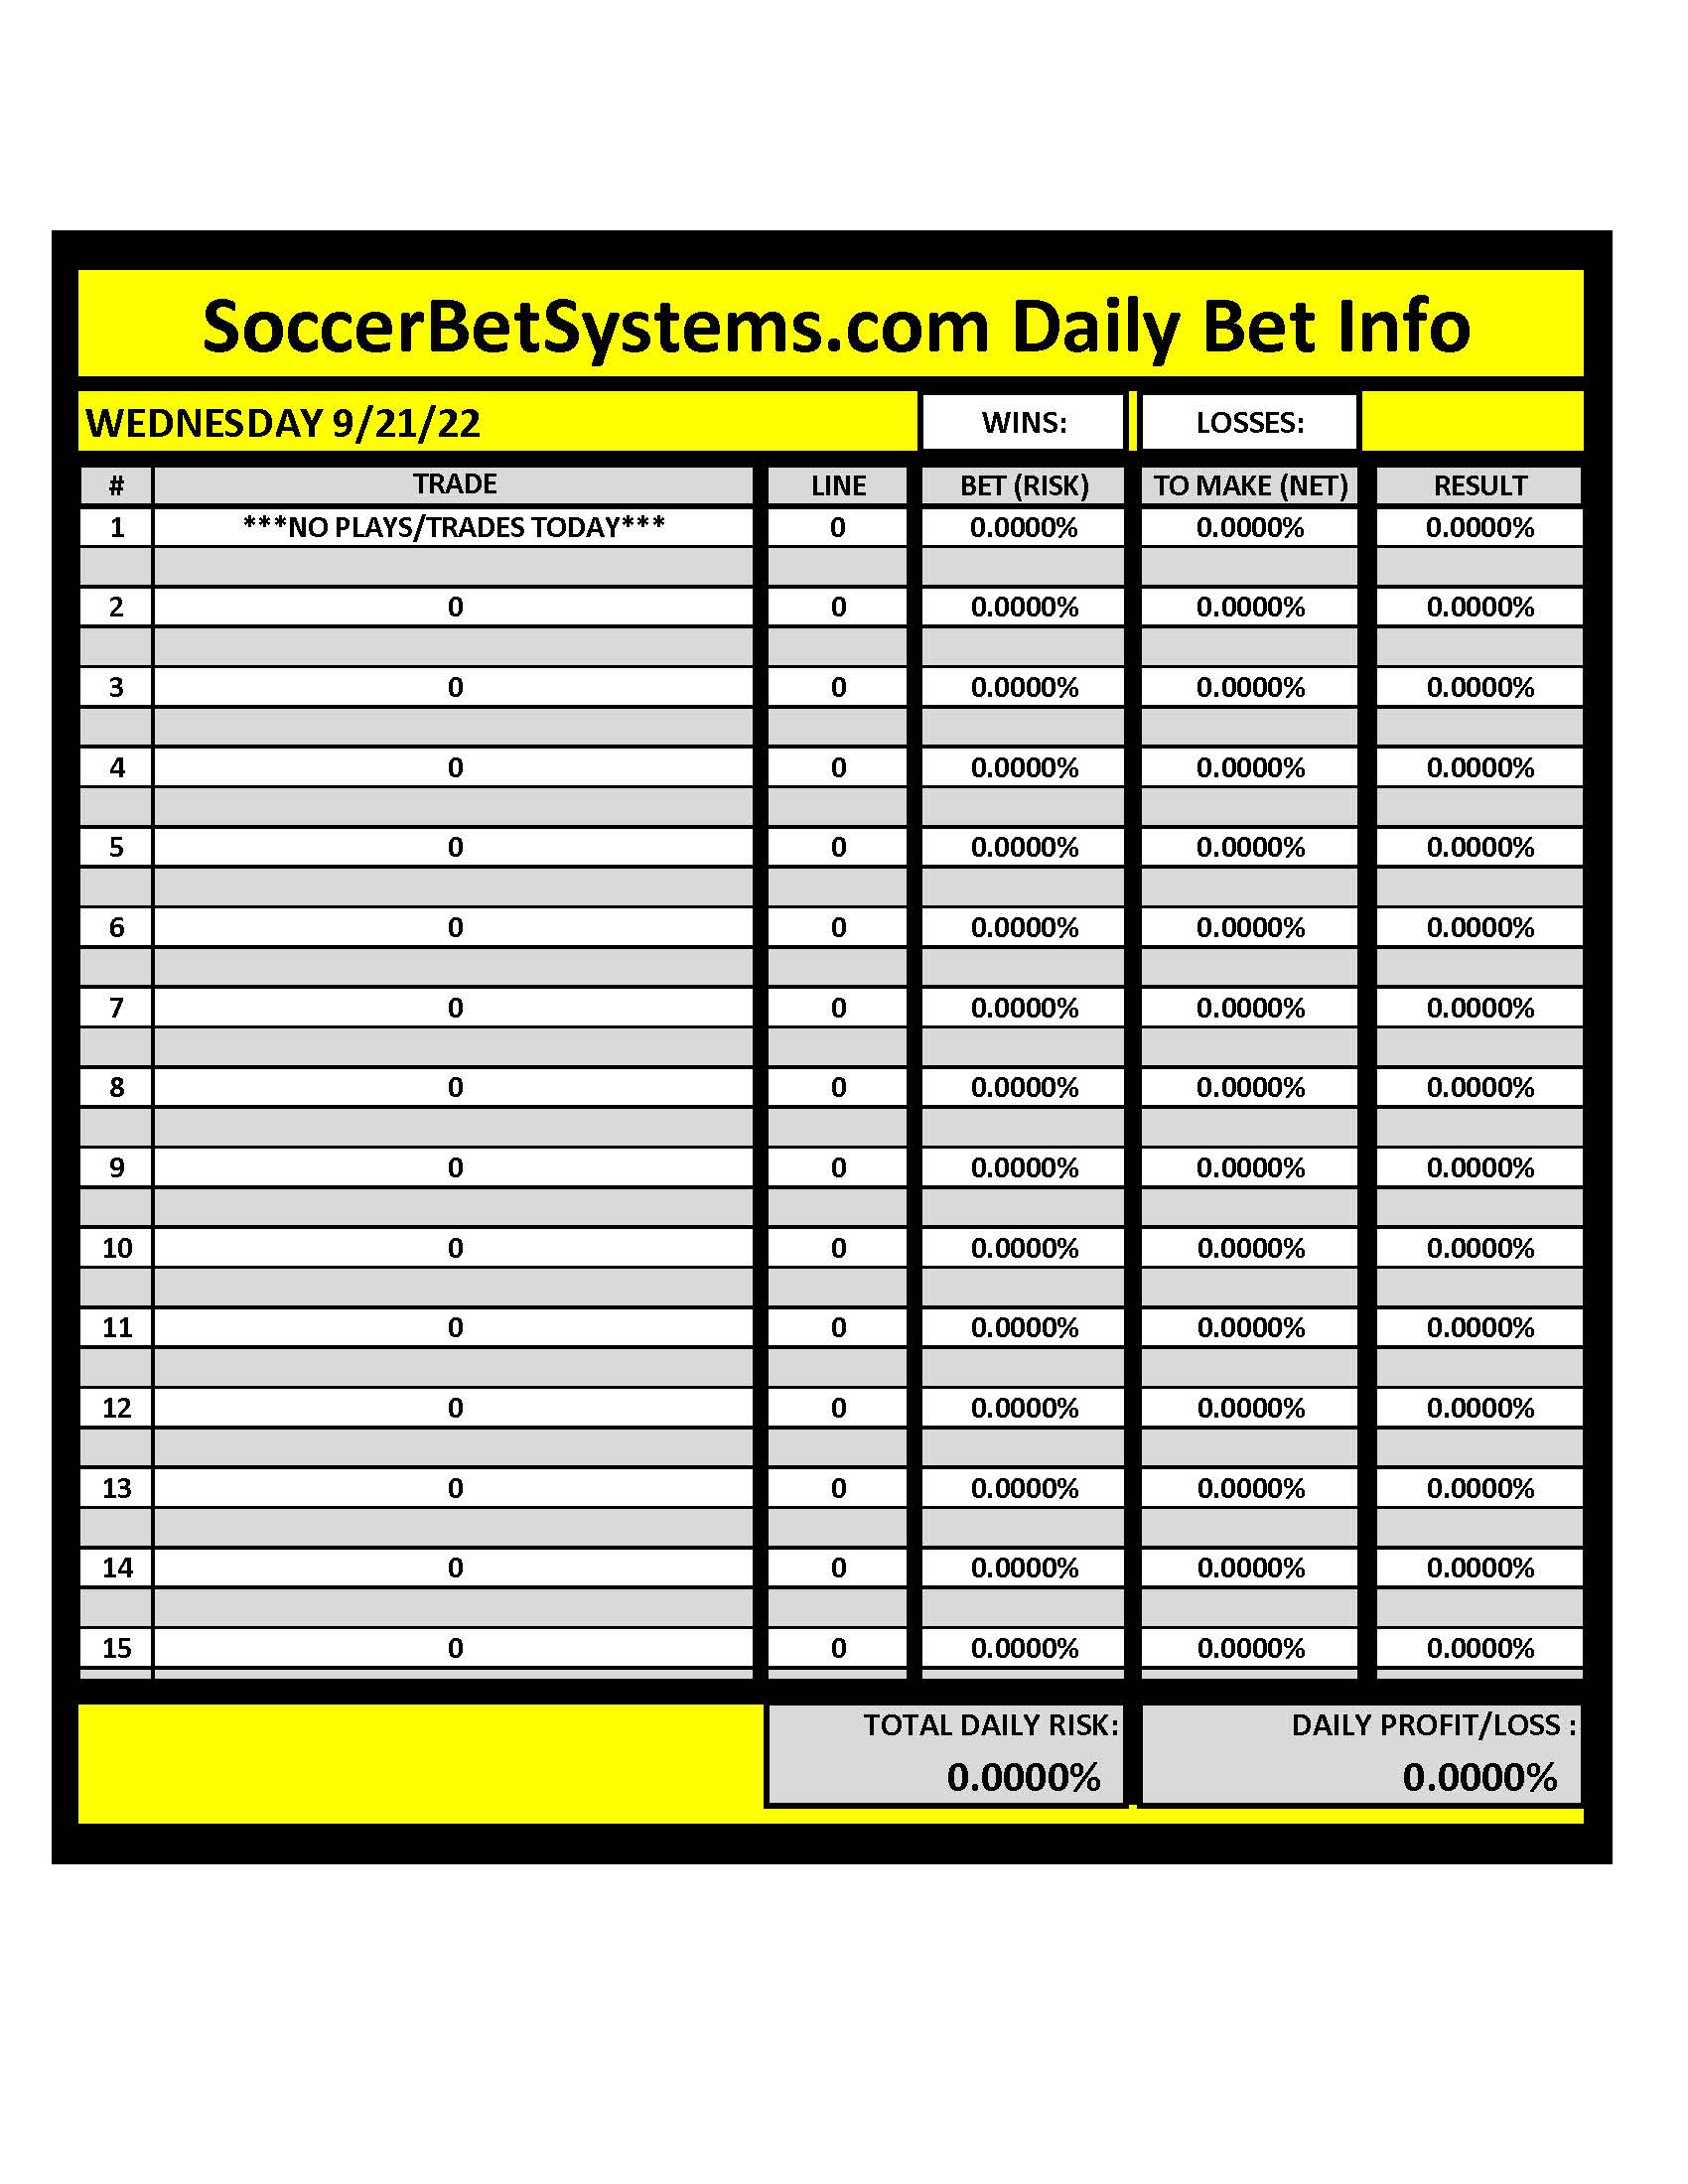 SoccerBetSystems.com 9/21/22 Daily Results